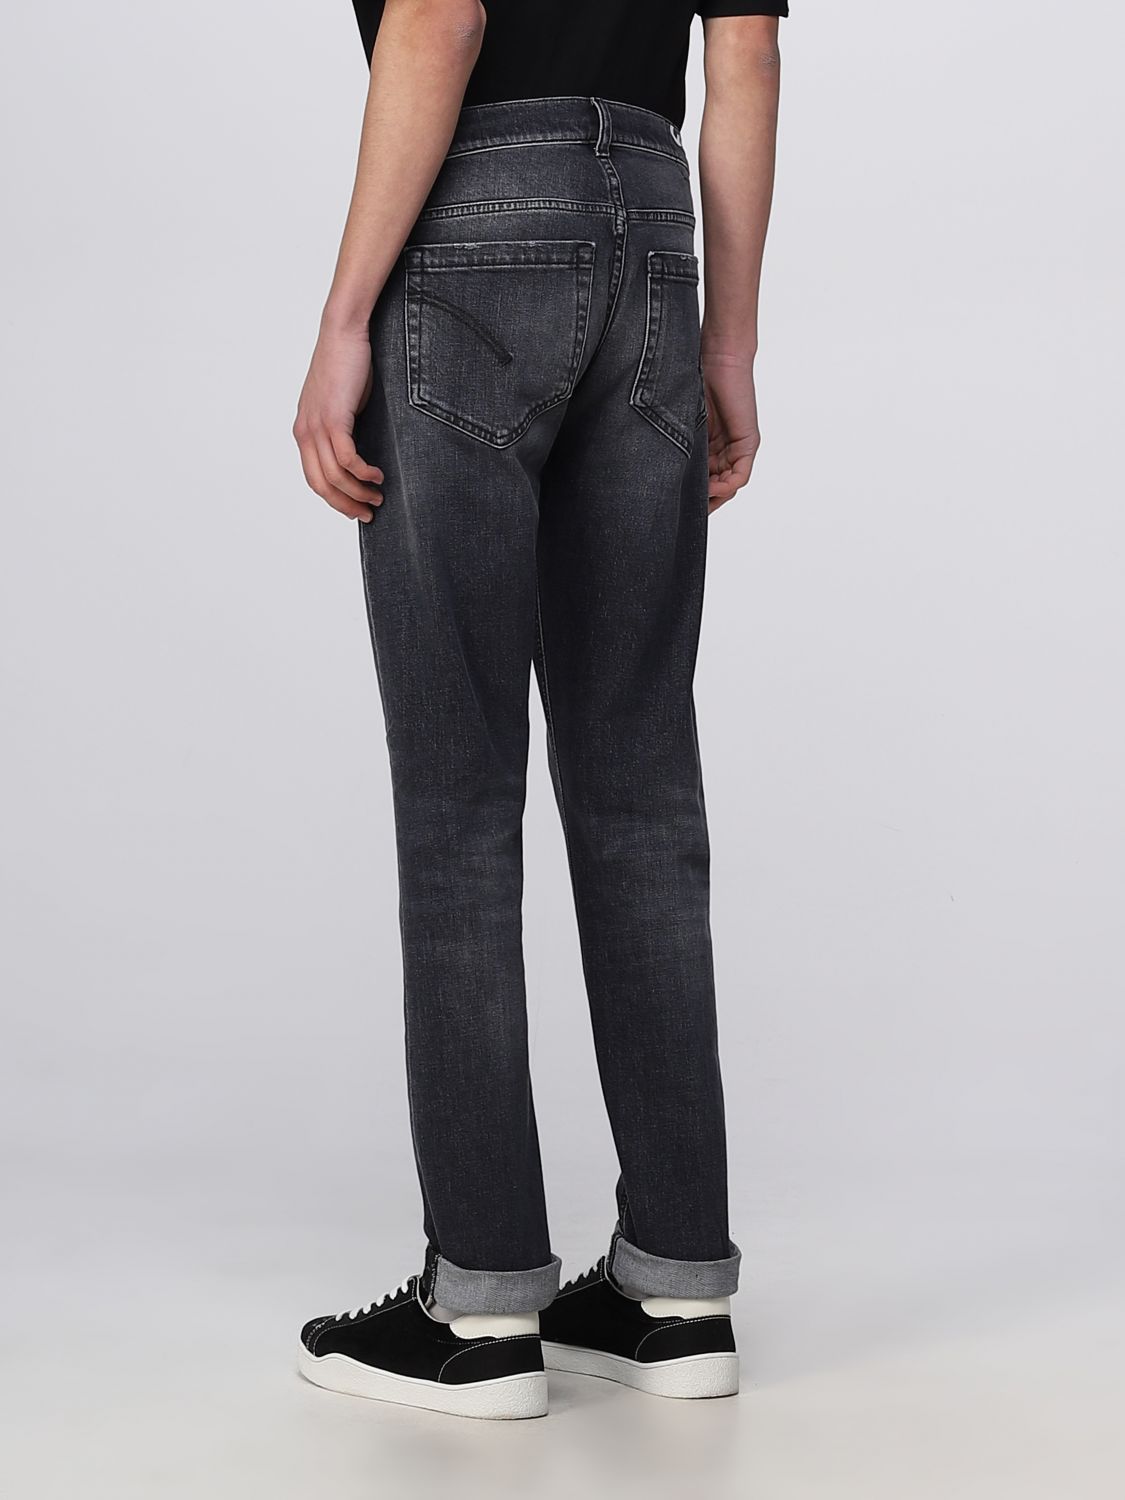 lepel kalkoen moersleutel DONDUP: jeans for man - Black | Dondup jeans UP232DS0215UFL3 online on  GIGLIO.COM